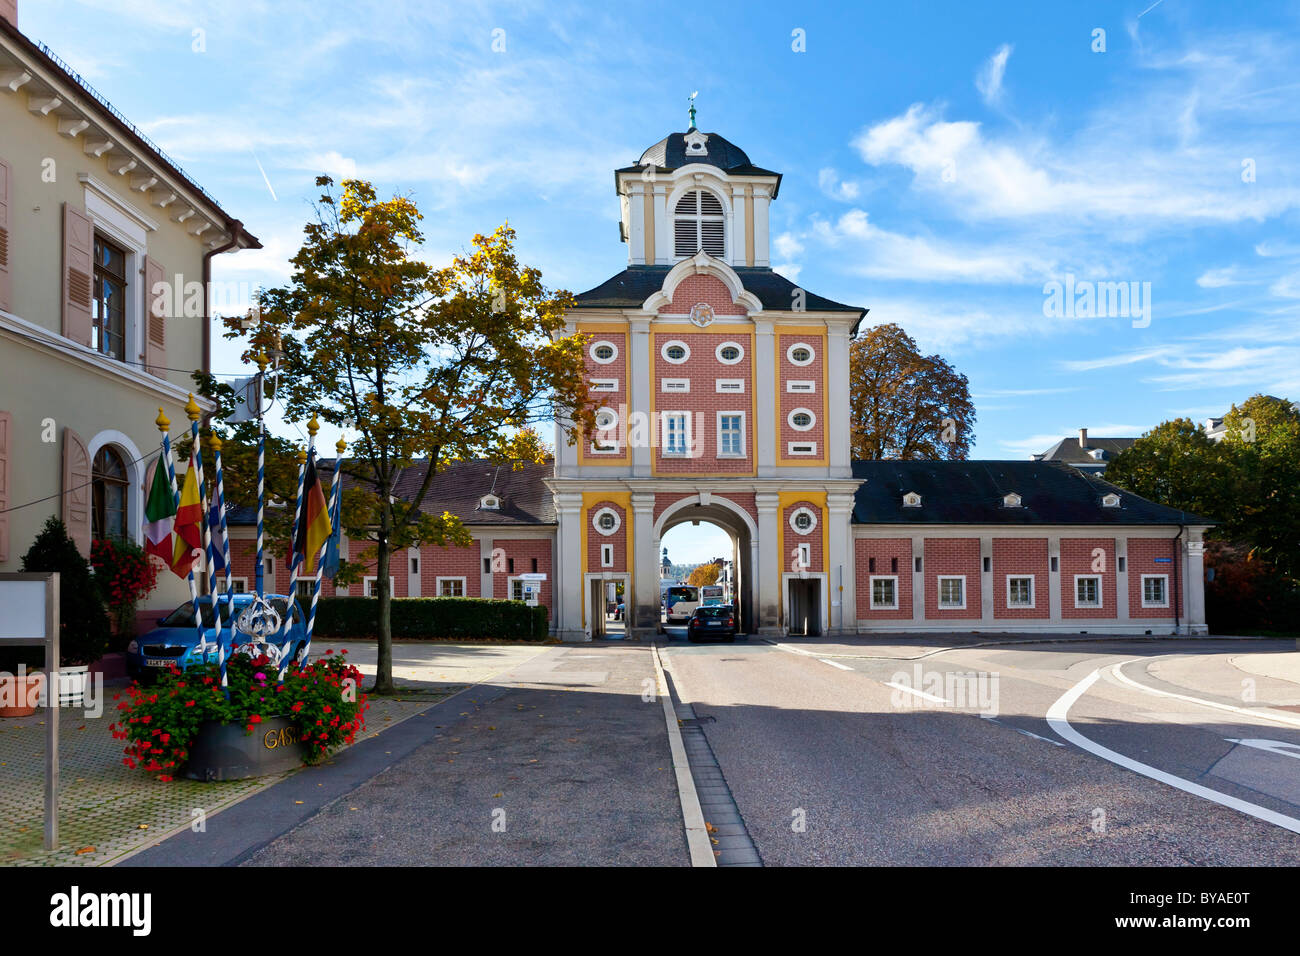 Damianstor gate, Bruchsal, Kraichgau region, Baden-Wuerttemberg, Germany, Europe Stock Photo